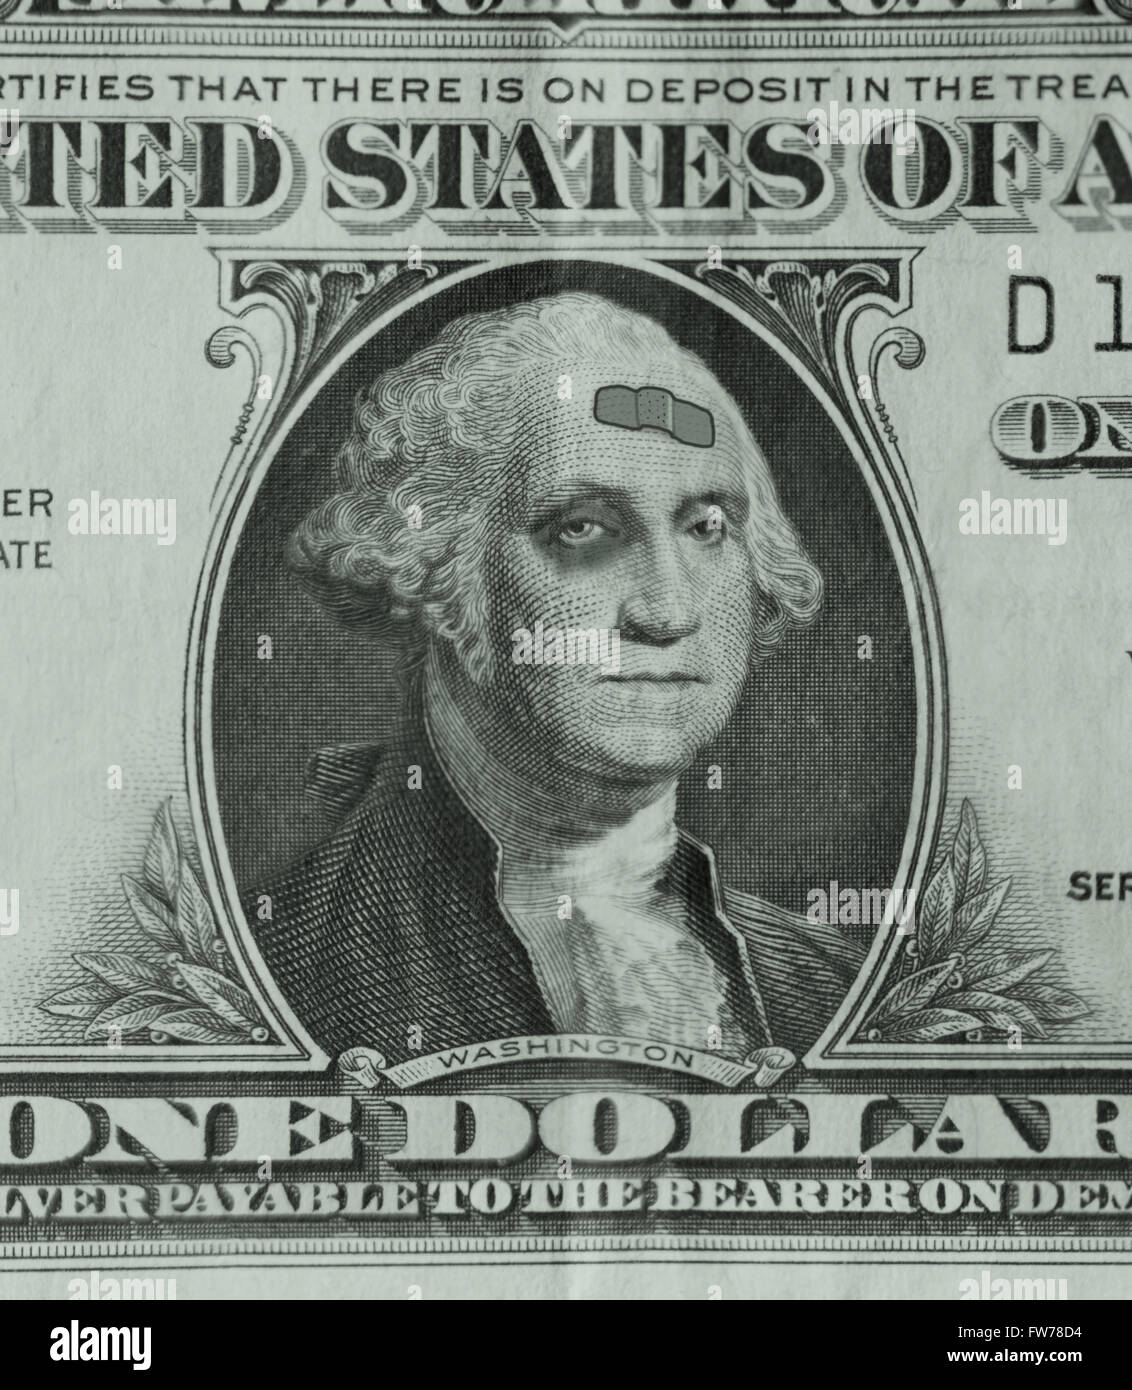 George Washington On A Dollar Bill Is Sporting A Black Eye And A Band Aid As The Weak Dollar